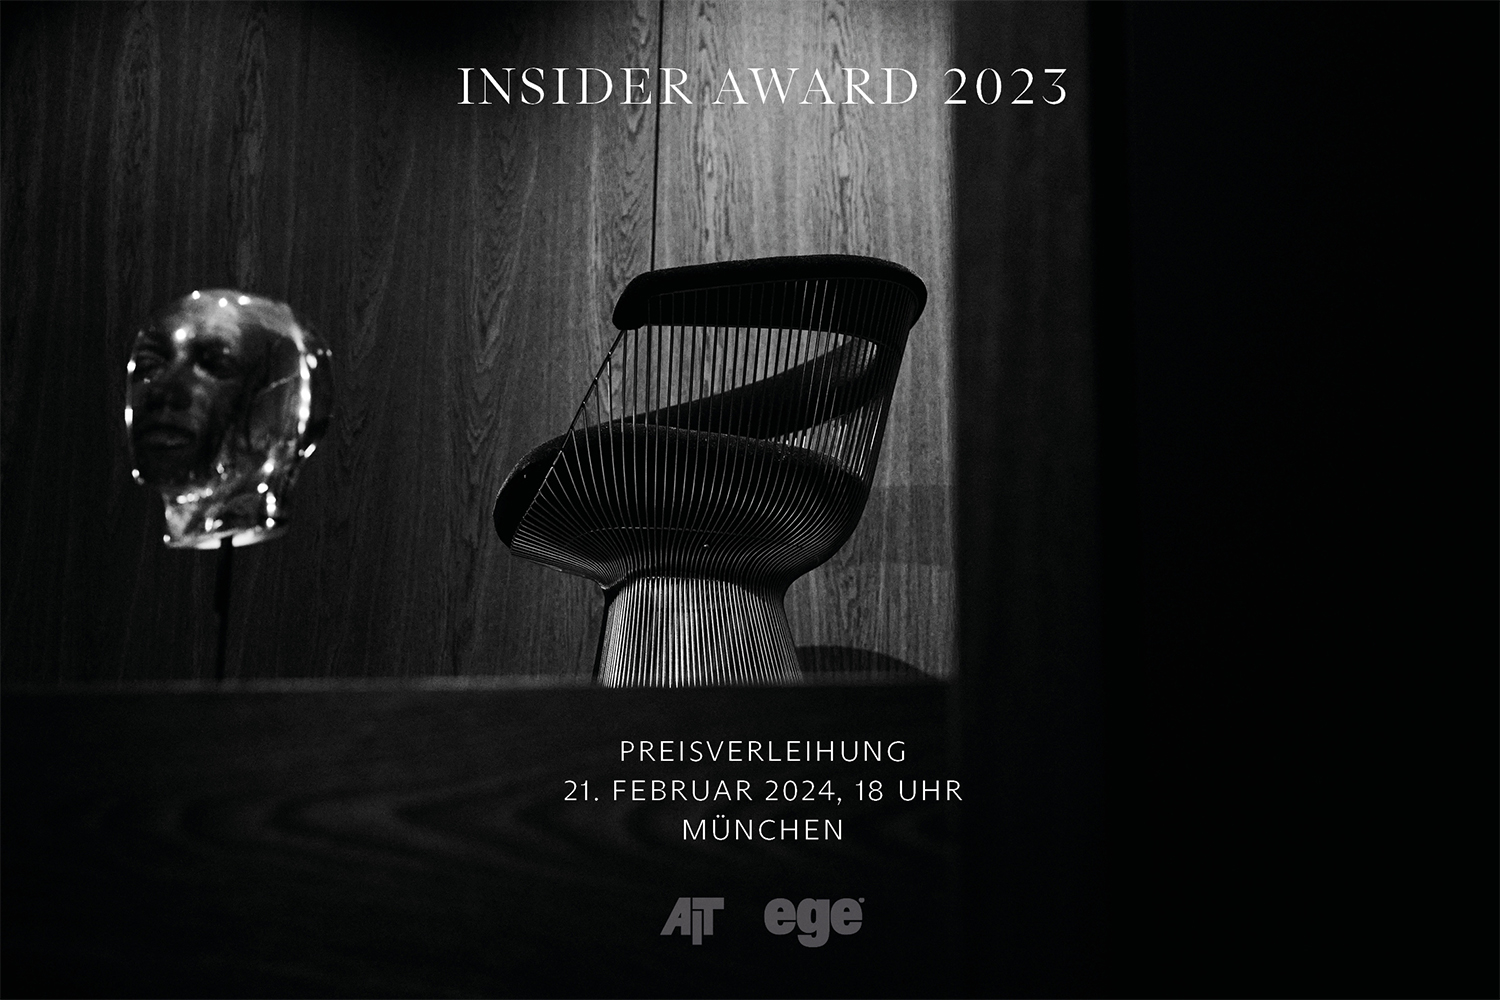 INsider Award 2023 – Preisverleihung in München